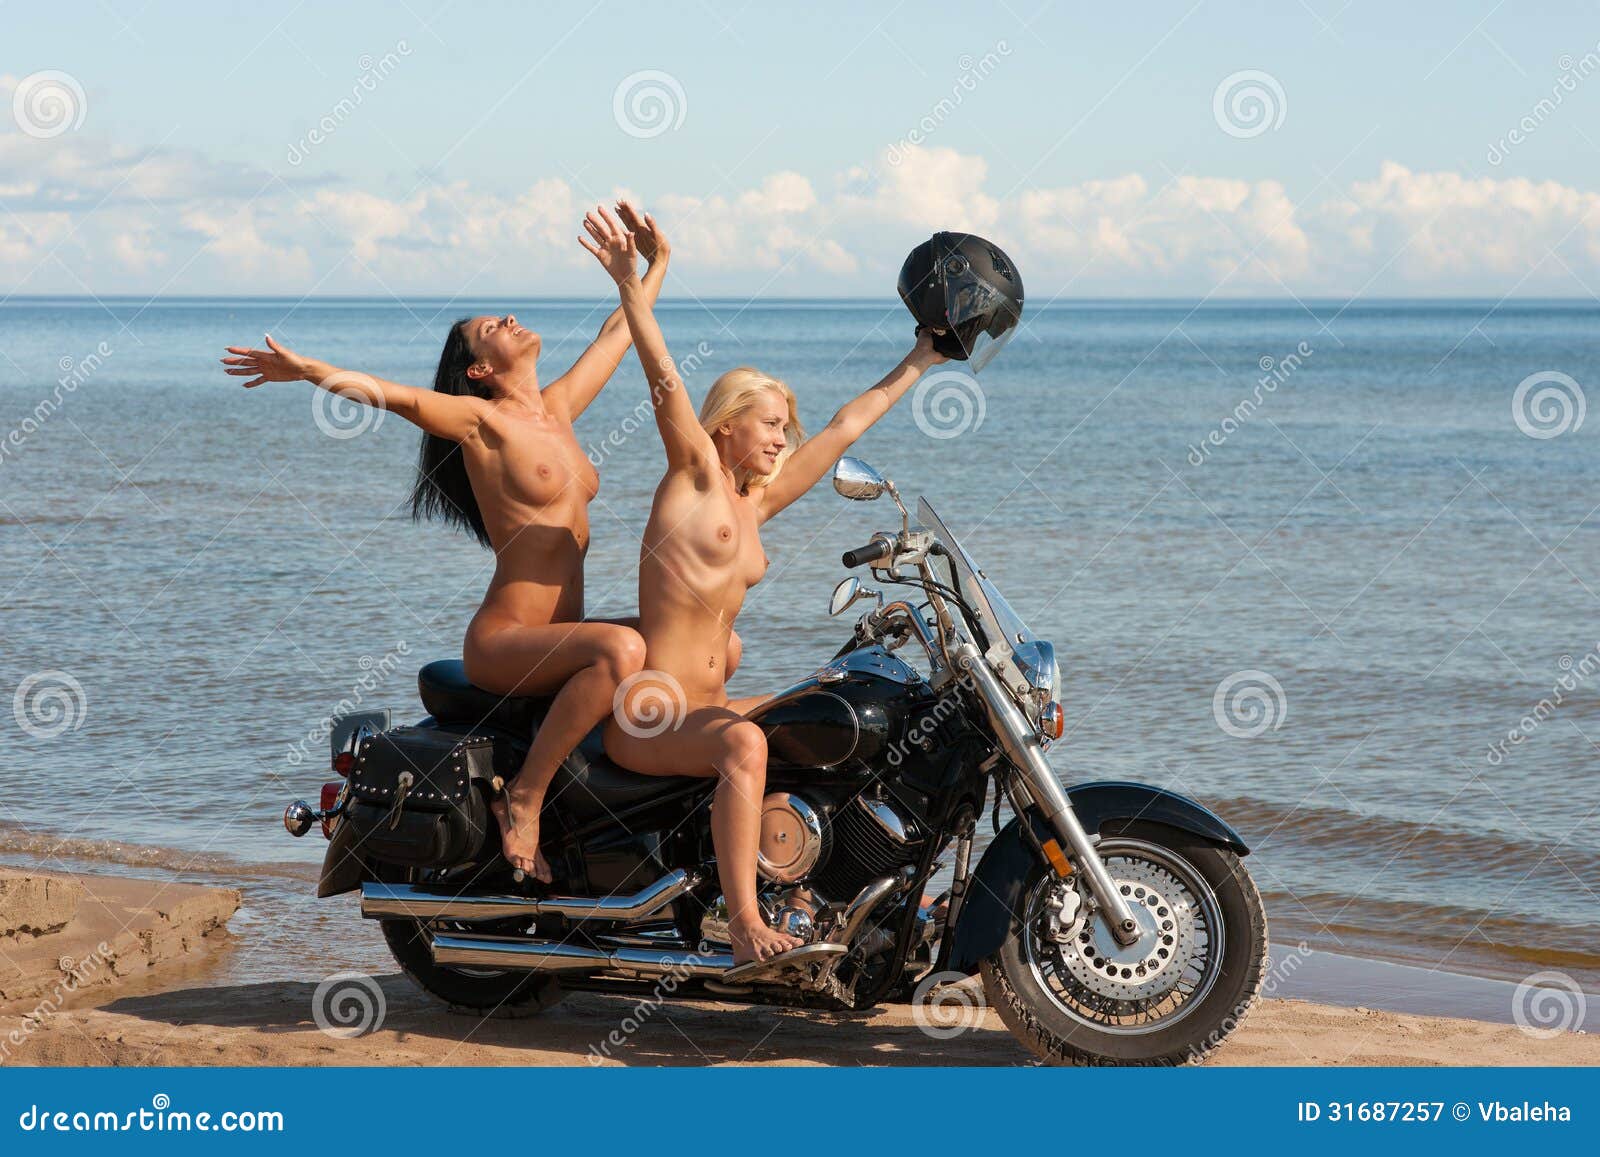 КОНКУРЕНЦИЈА - Page 5 Two-beautiful-naked-women-motorcycle-against-sea-background-31687257